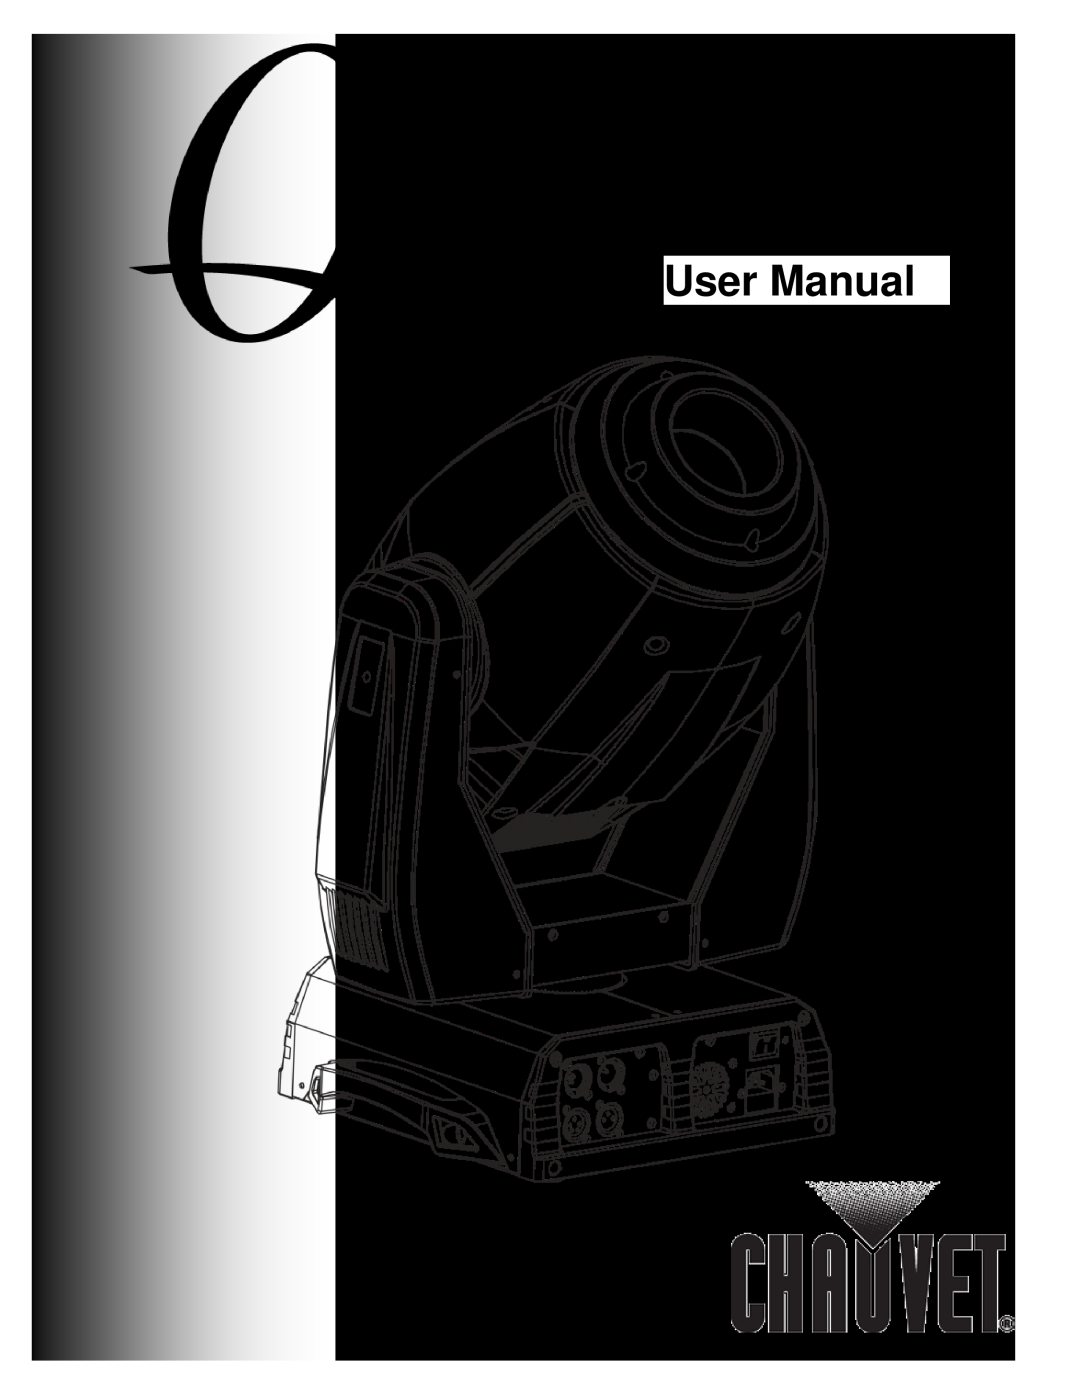 Chauvet 560 user manual 